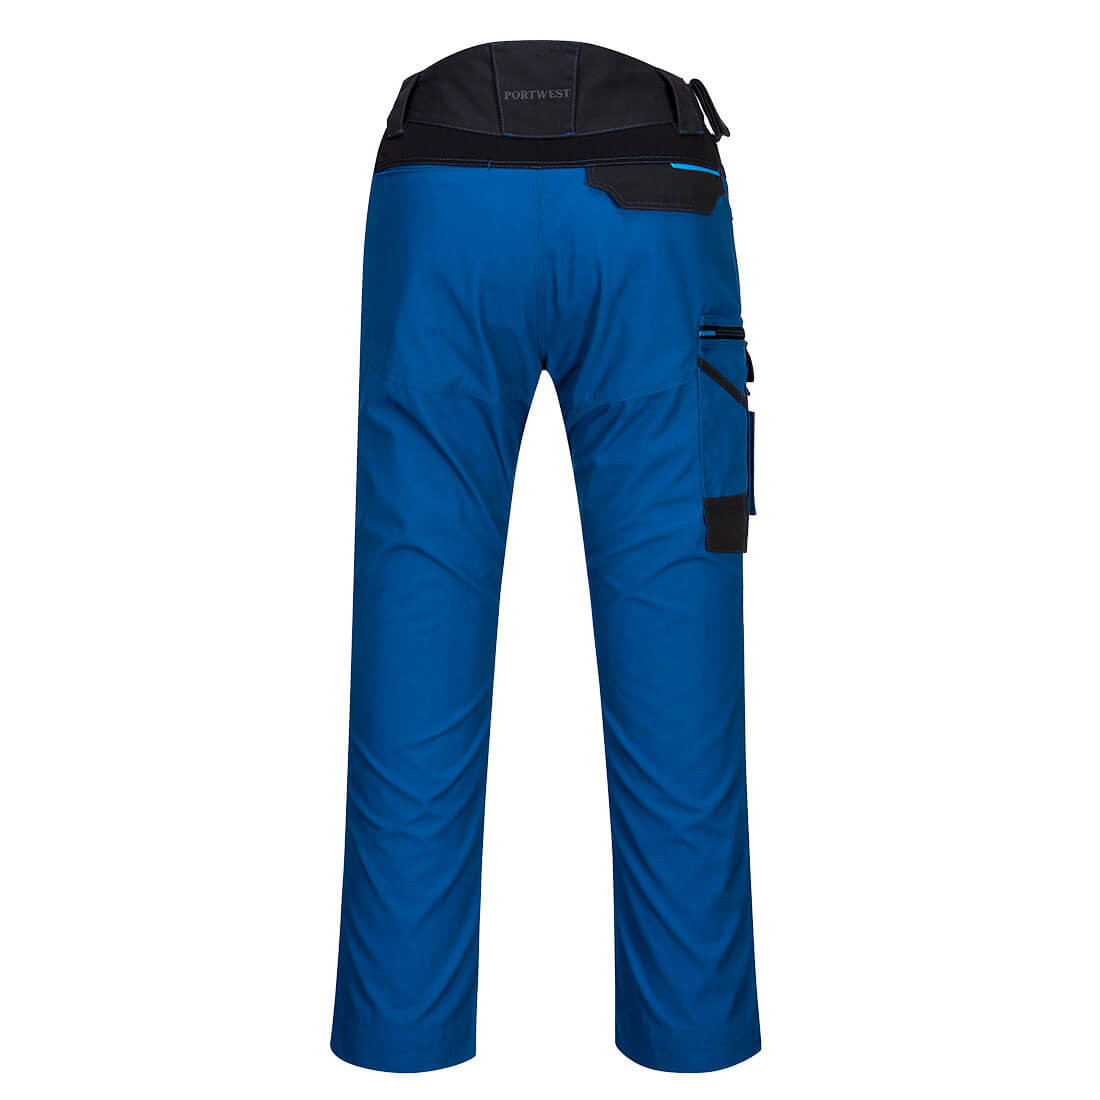 Pantaloni Service WX3 - Imbracaminte de protectie